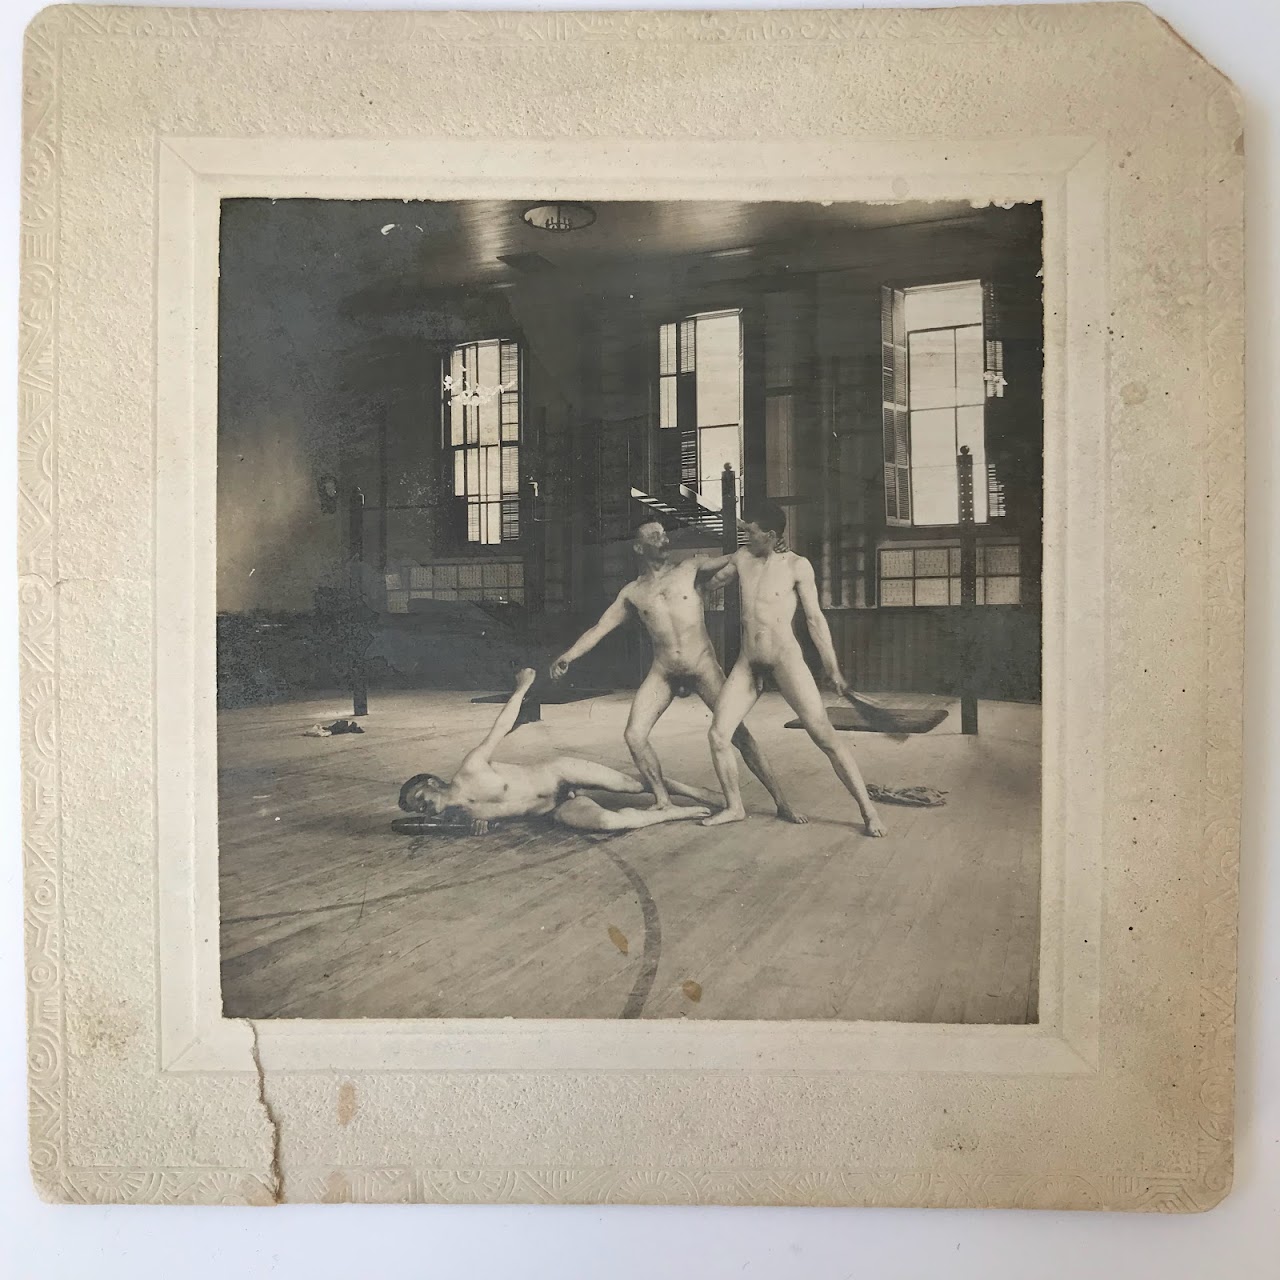 Nude Antique Photograph Pair